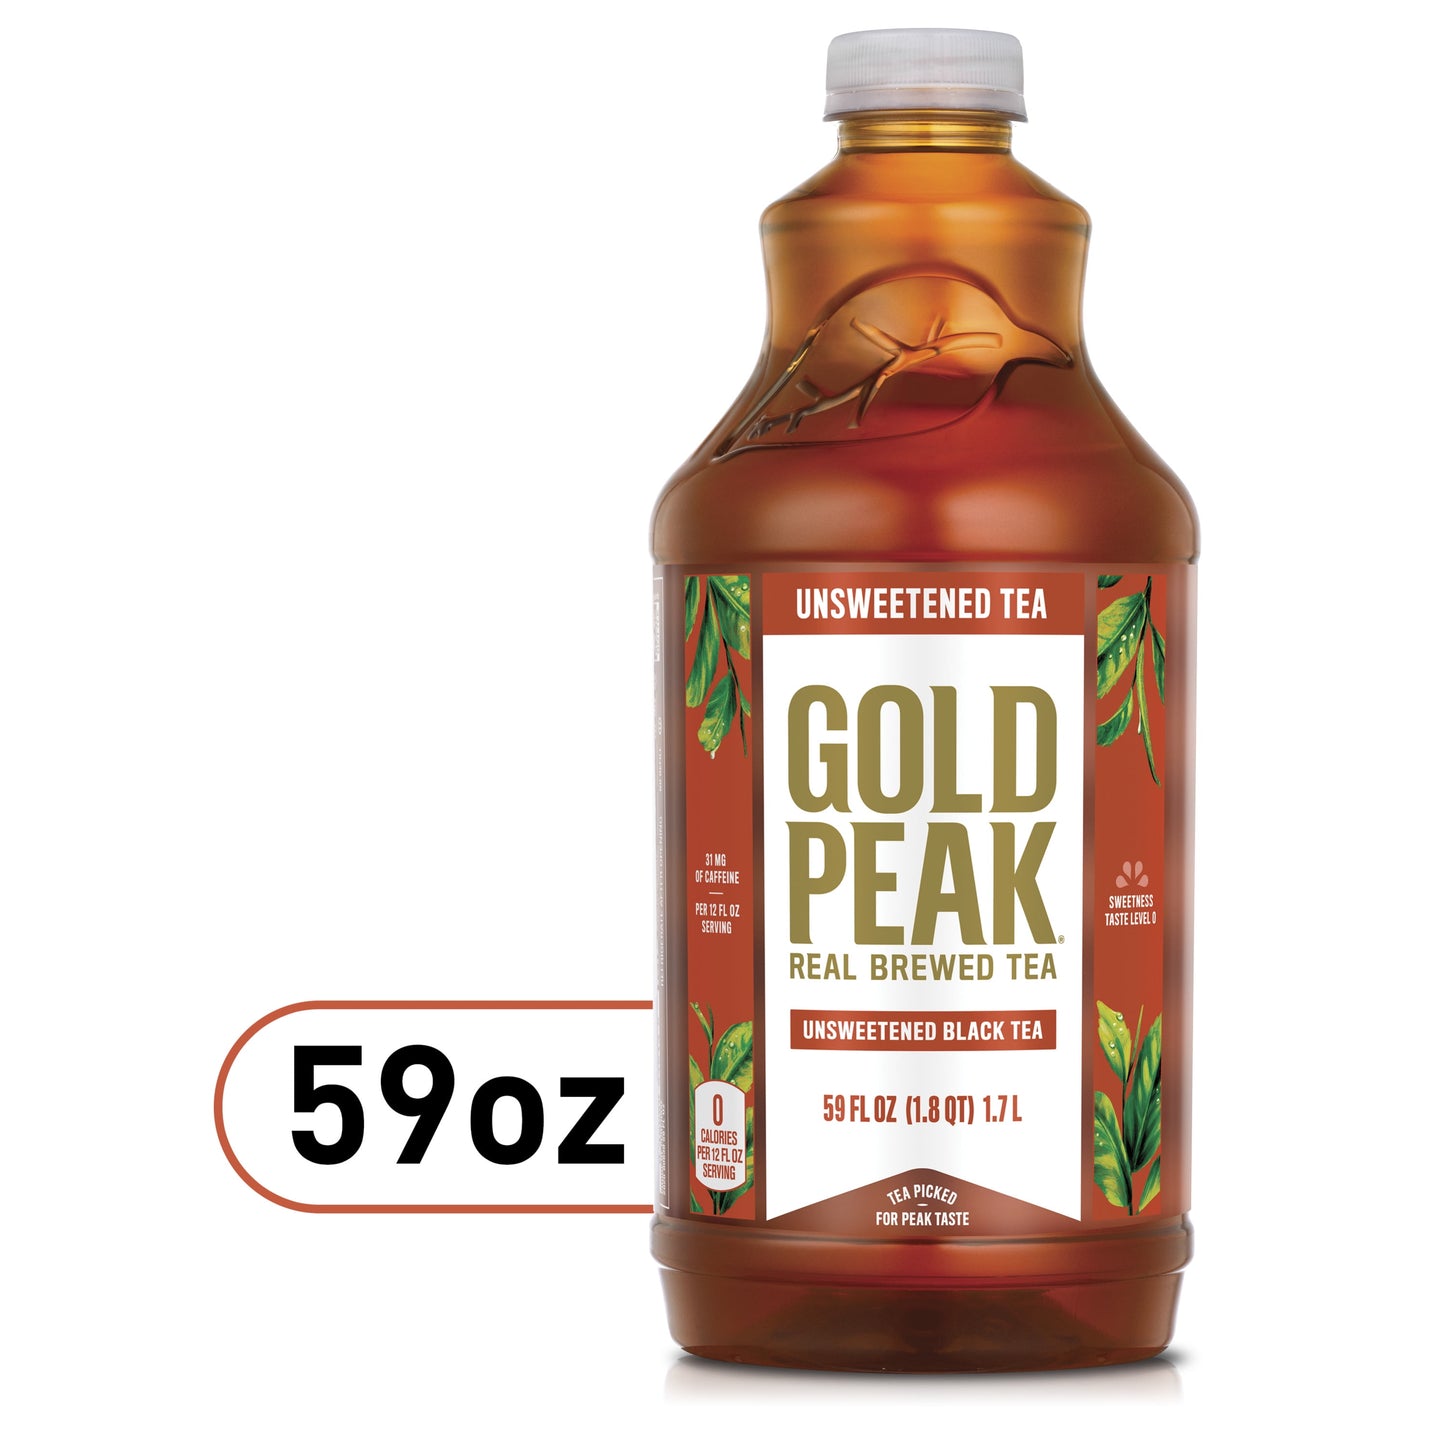 Gold Peak Real Brewed Tea Unsweetened Black Tea Drink, 59 fl oz